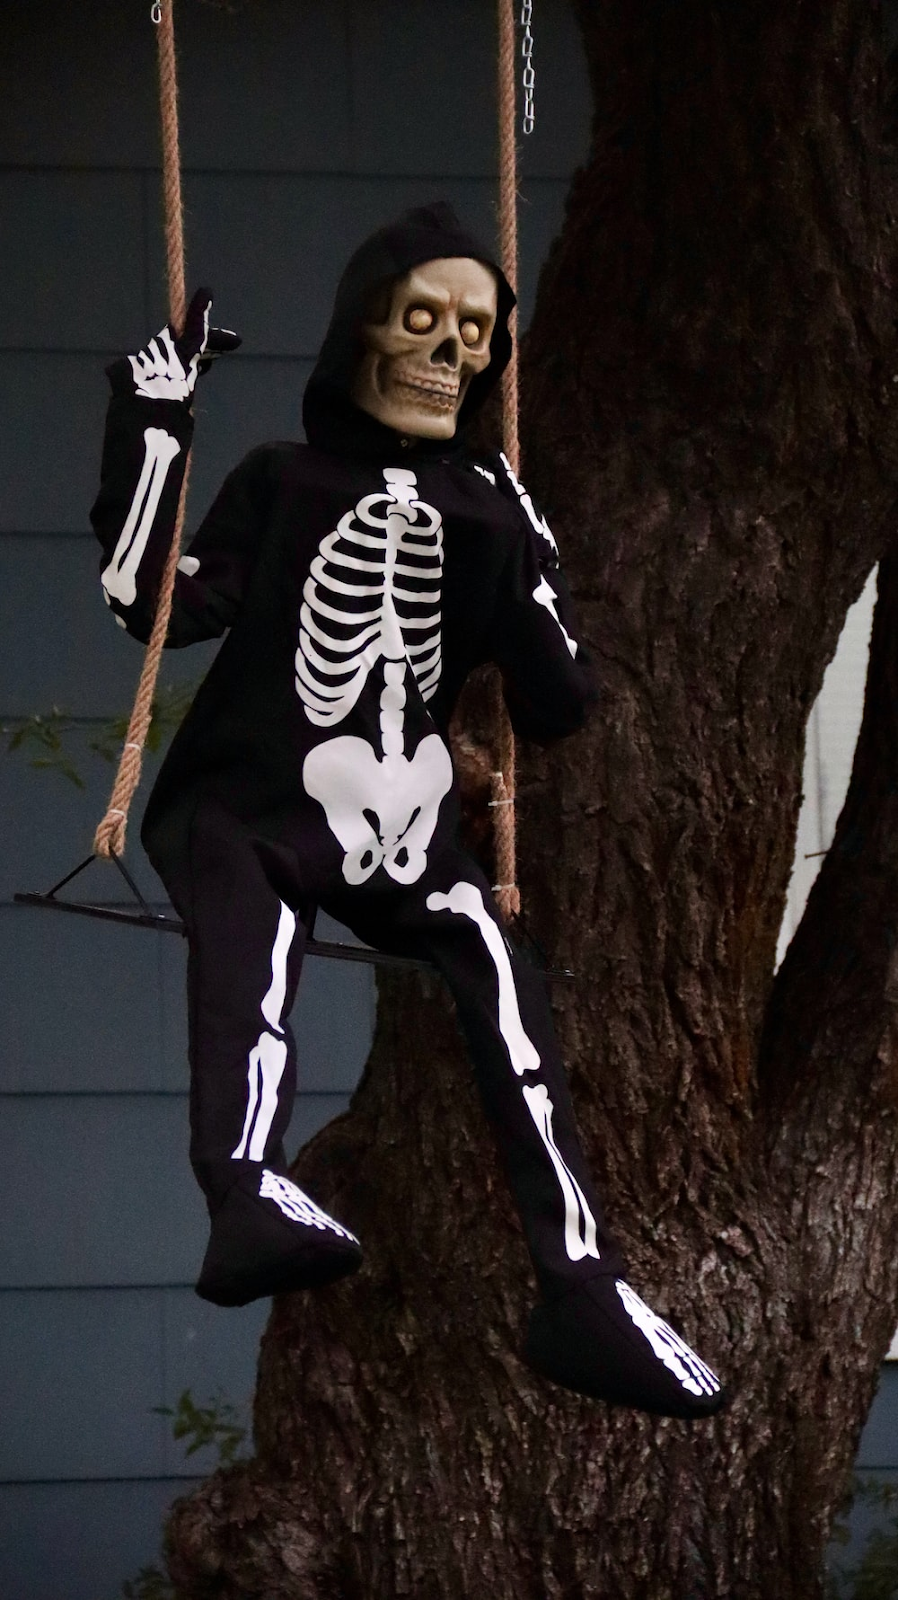 Man in Black & White Skeleton Costume on a Swing Beside Brown Tree